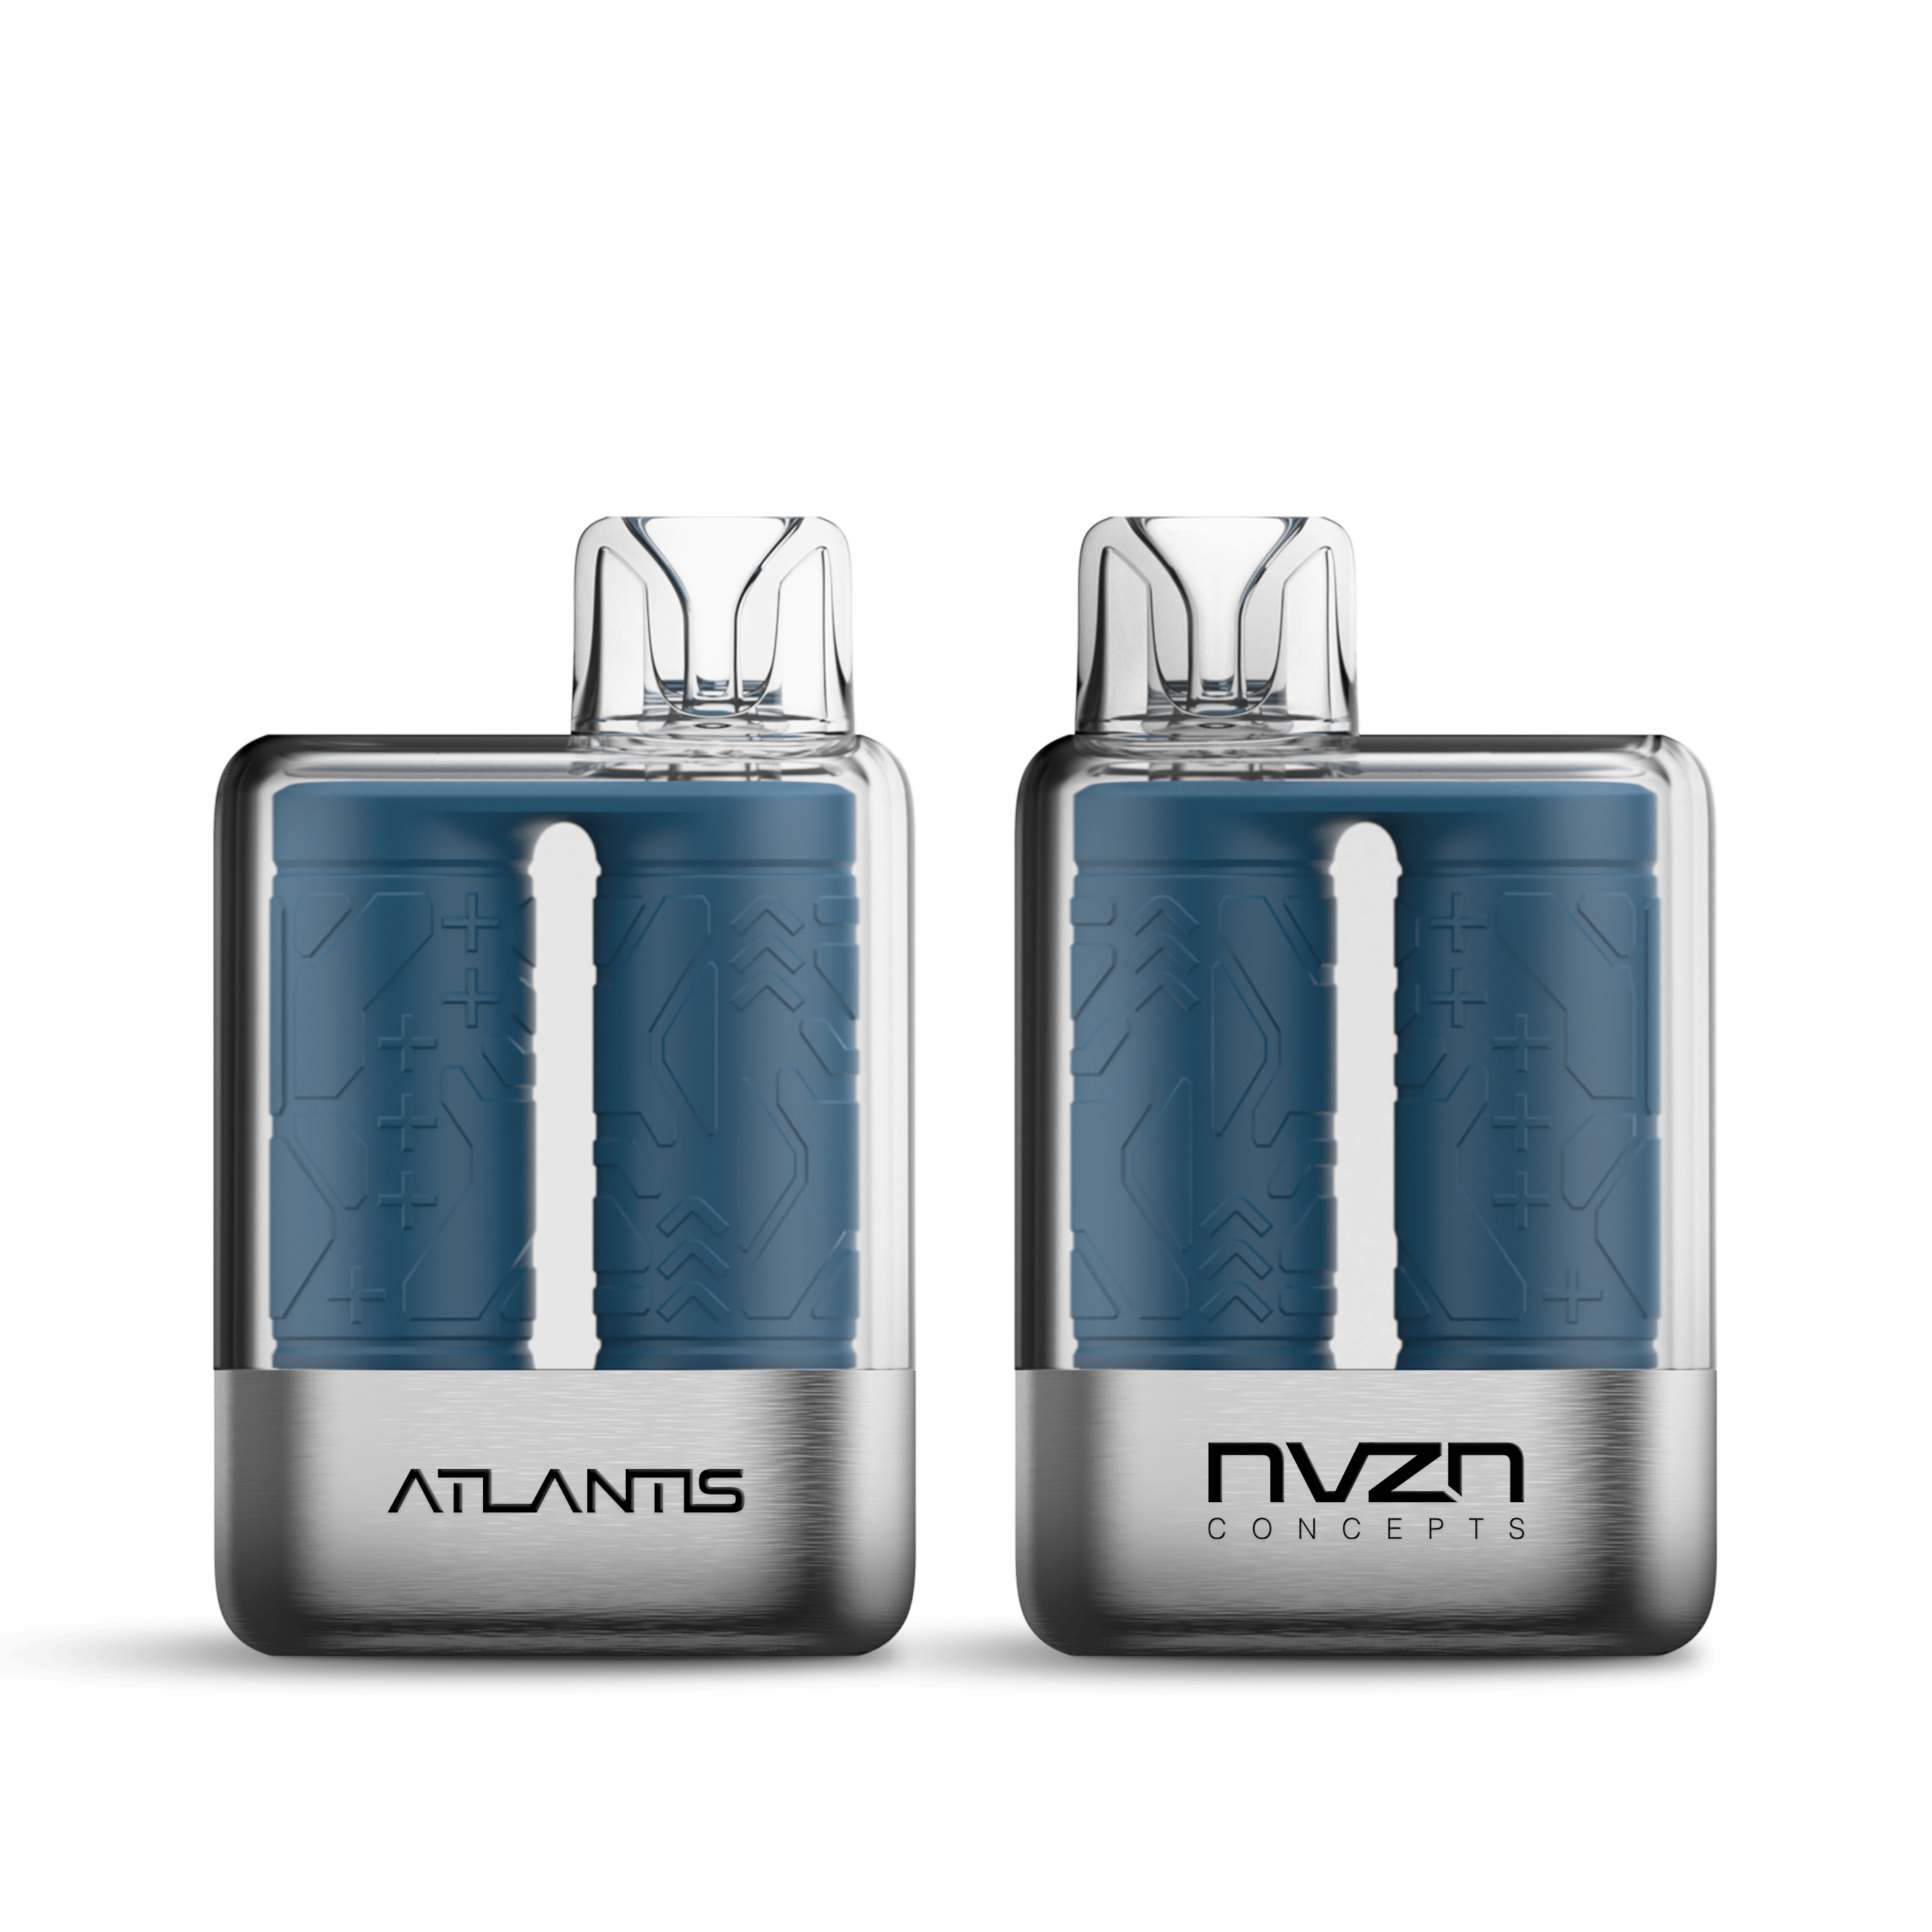 Atlantis by NZVN 8000 - Blue Razz Blast Disposable Vape available on Canada online vape shop